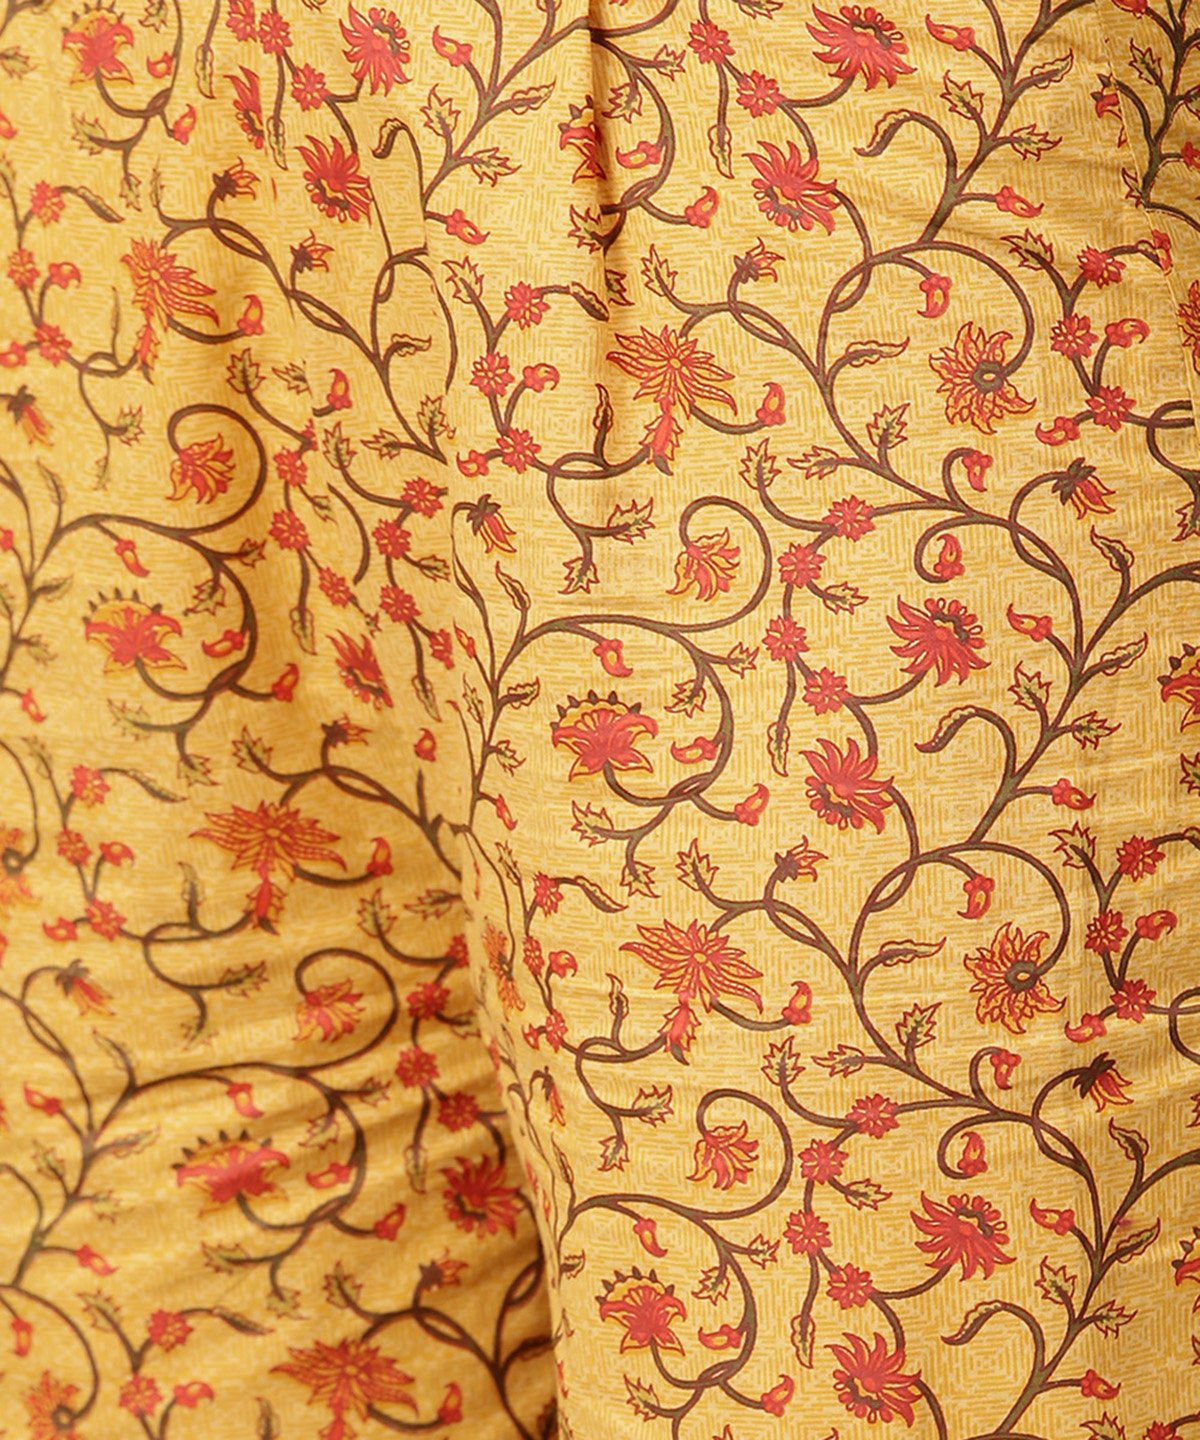 Women's Yellow 3/4Th Sleeve Cotton Kurta With Ankle Length Printed Pallazo - Nayo Clothing